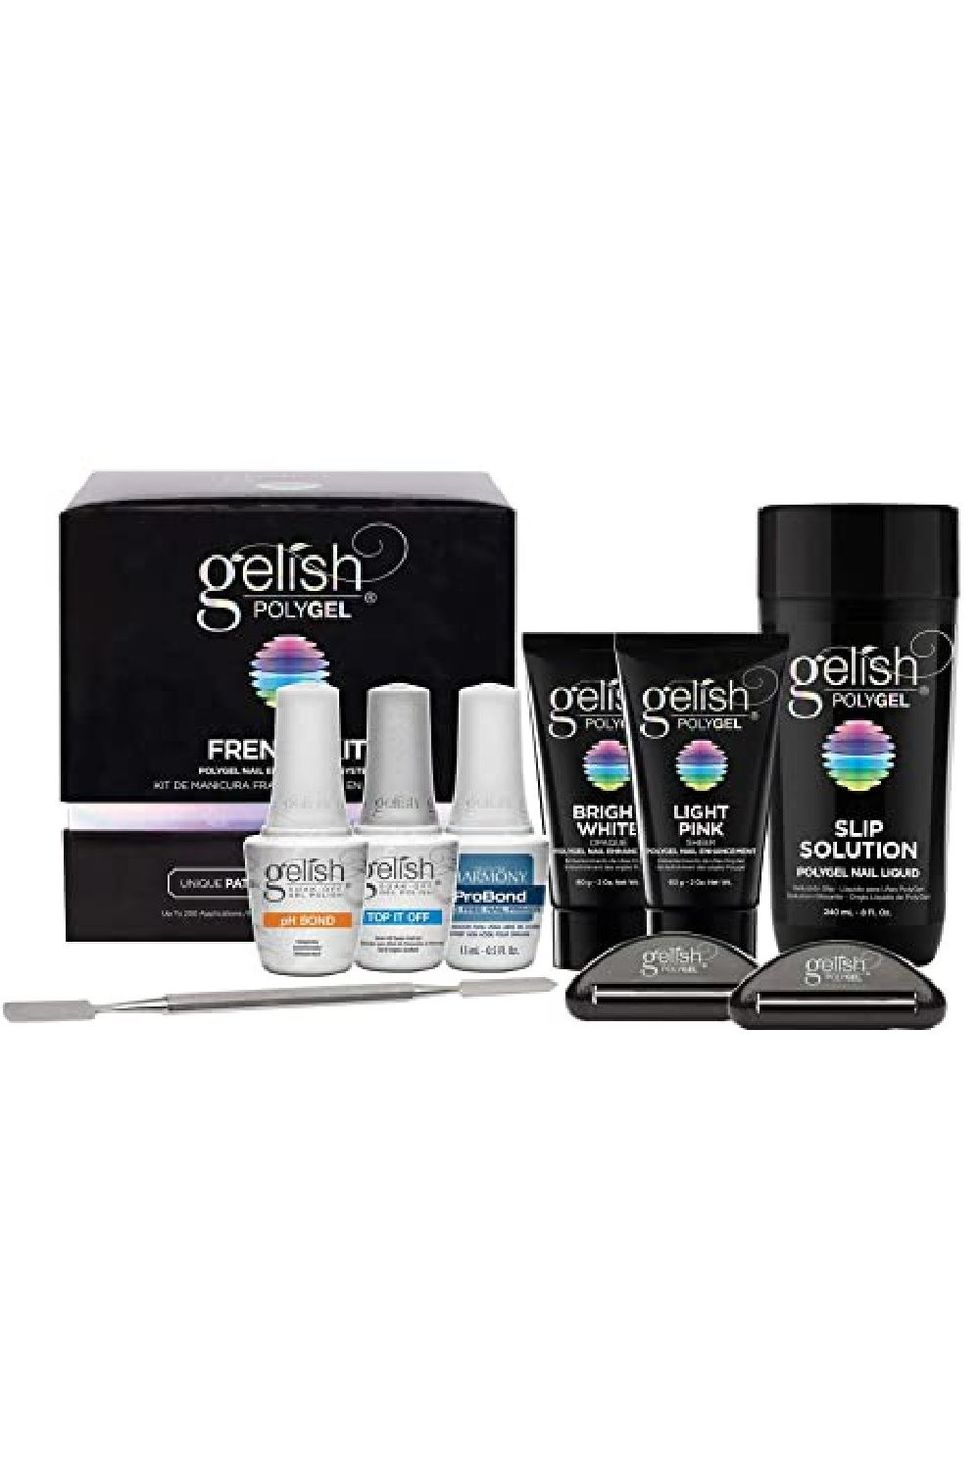 Gelish PolyGel Brand Nail Enhancement French Kit